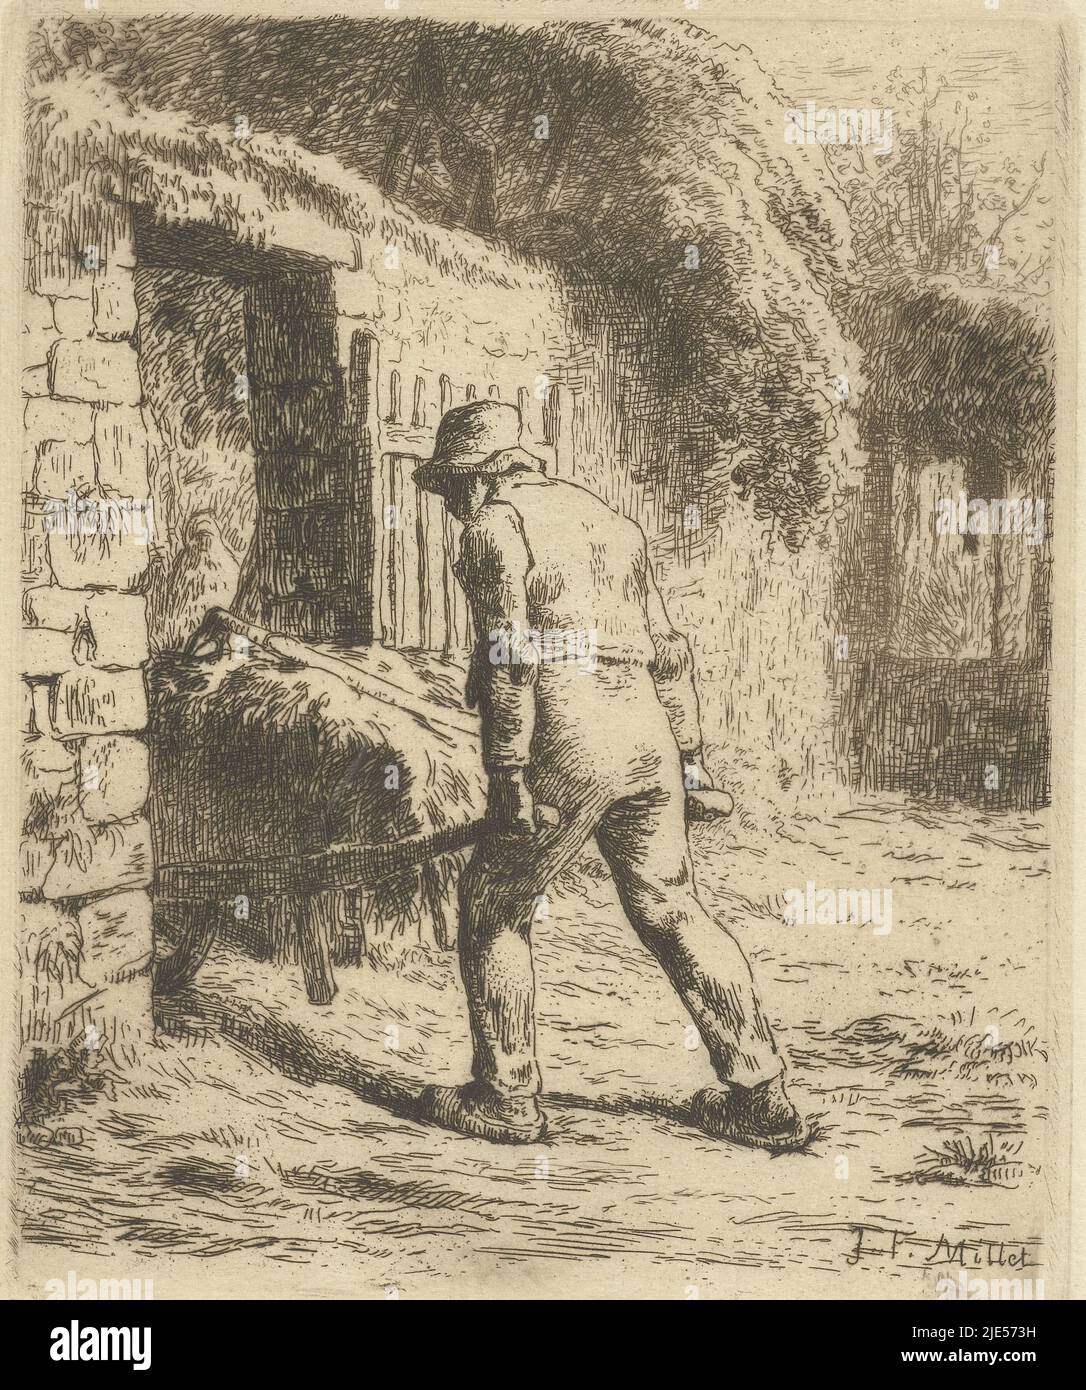 Farmer walks with wheelbarrow on farm Le paysan rentrant du fumier, print maker: Jean François Millet, (mentioned on object), Jean François Millet, 1855, paper, etching, h 166 mm × w 134 mm Stock Photo